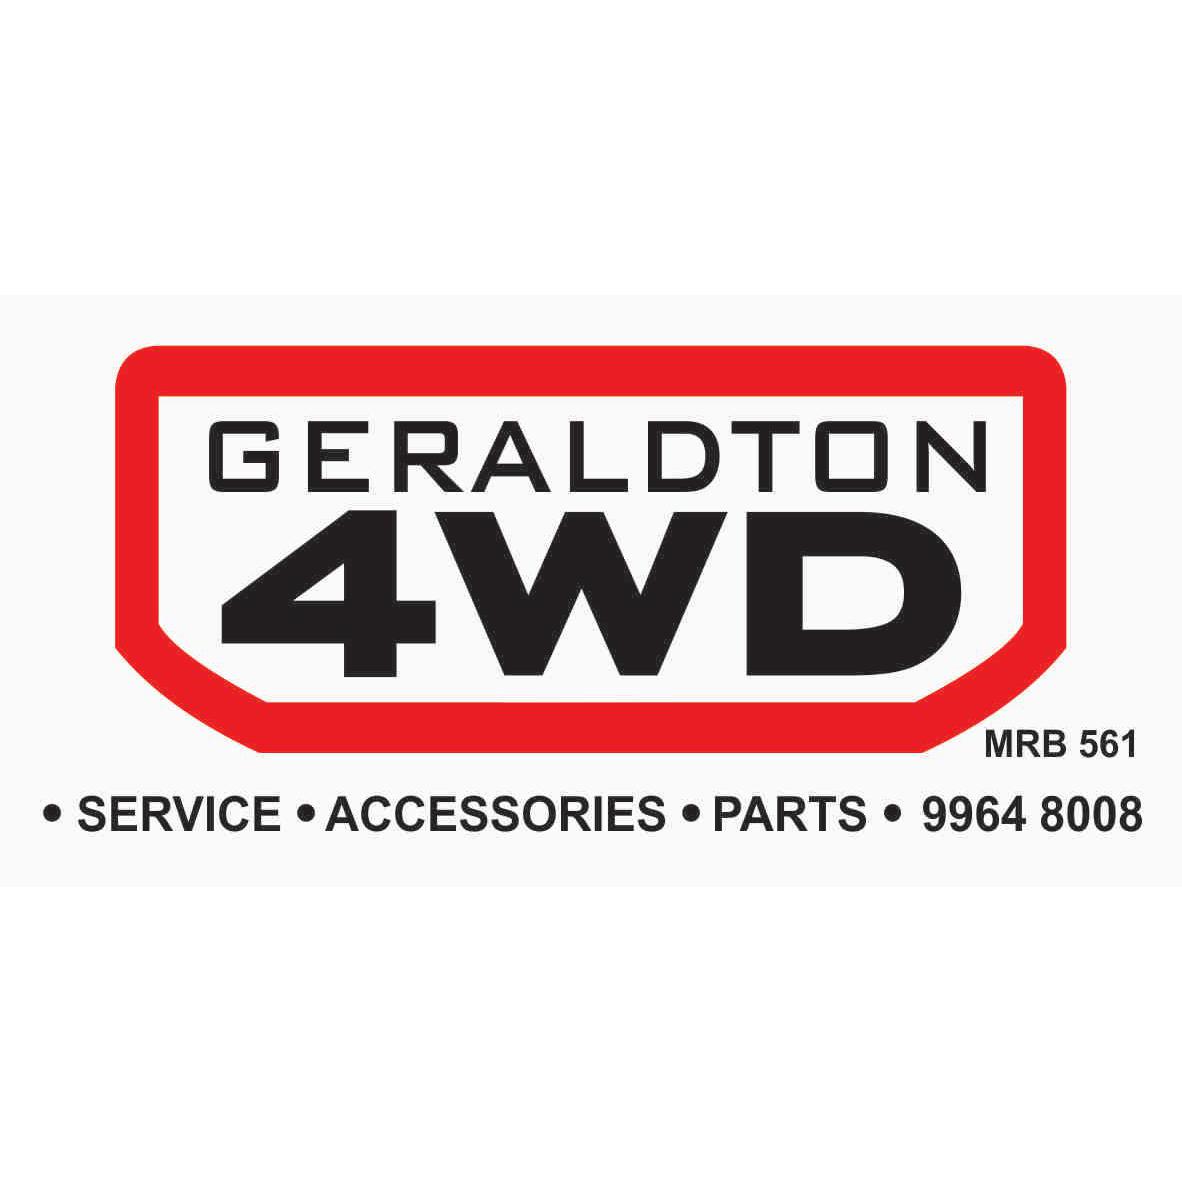 Geraldton 4wd Service & Repair - Geraldton, WA 6530 - (08) 9964 8008 | ShowMeLocal.com